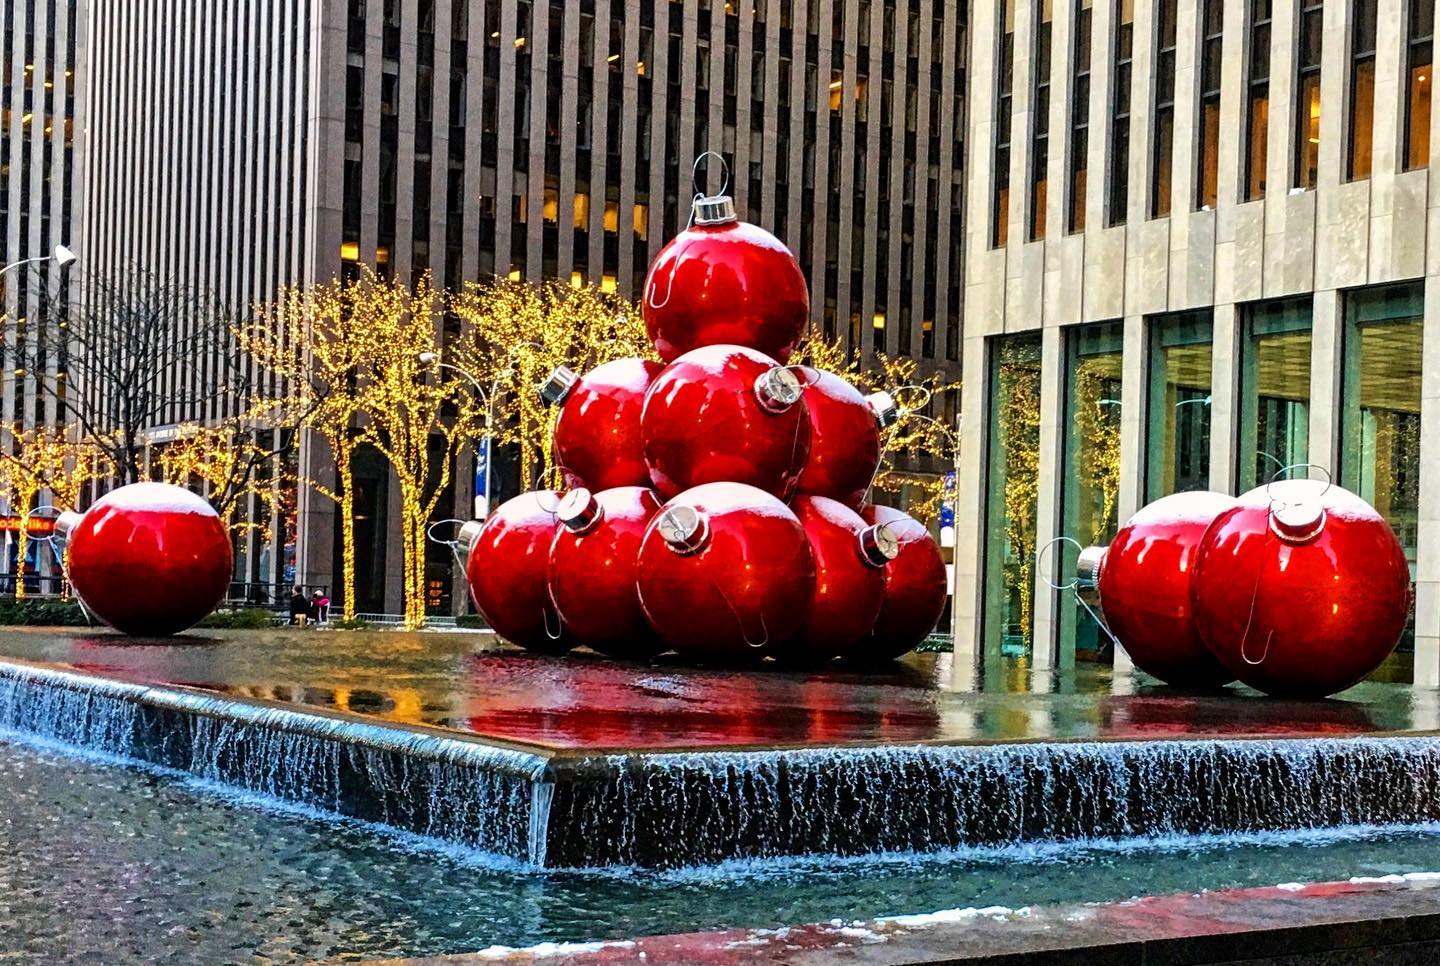 Midtown, NYC, New York
One more. Giant Christmas tree baubles.
#usa #us #usatravel #usareisen #usatravels #usareise #citytrip #cityphotography #citylove #newyork #newyorkcity #nyc #nycphotography #christmas #christmasiscoming #christmasdecor #christmastime #christmasvibes #christmastime #christmasnyc #christmasbaubles #merrychristmas #travelphotography #reisefotografie #christmasinnewyork #christmasinnyc #travelblog #reiseblog #instachristmas